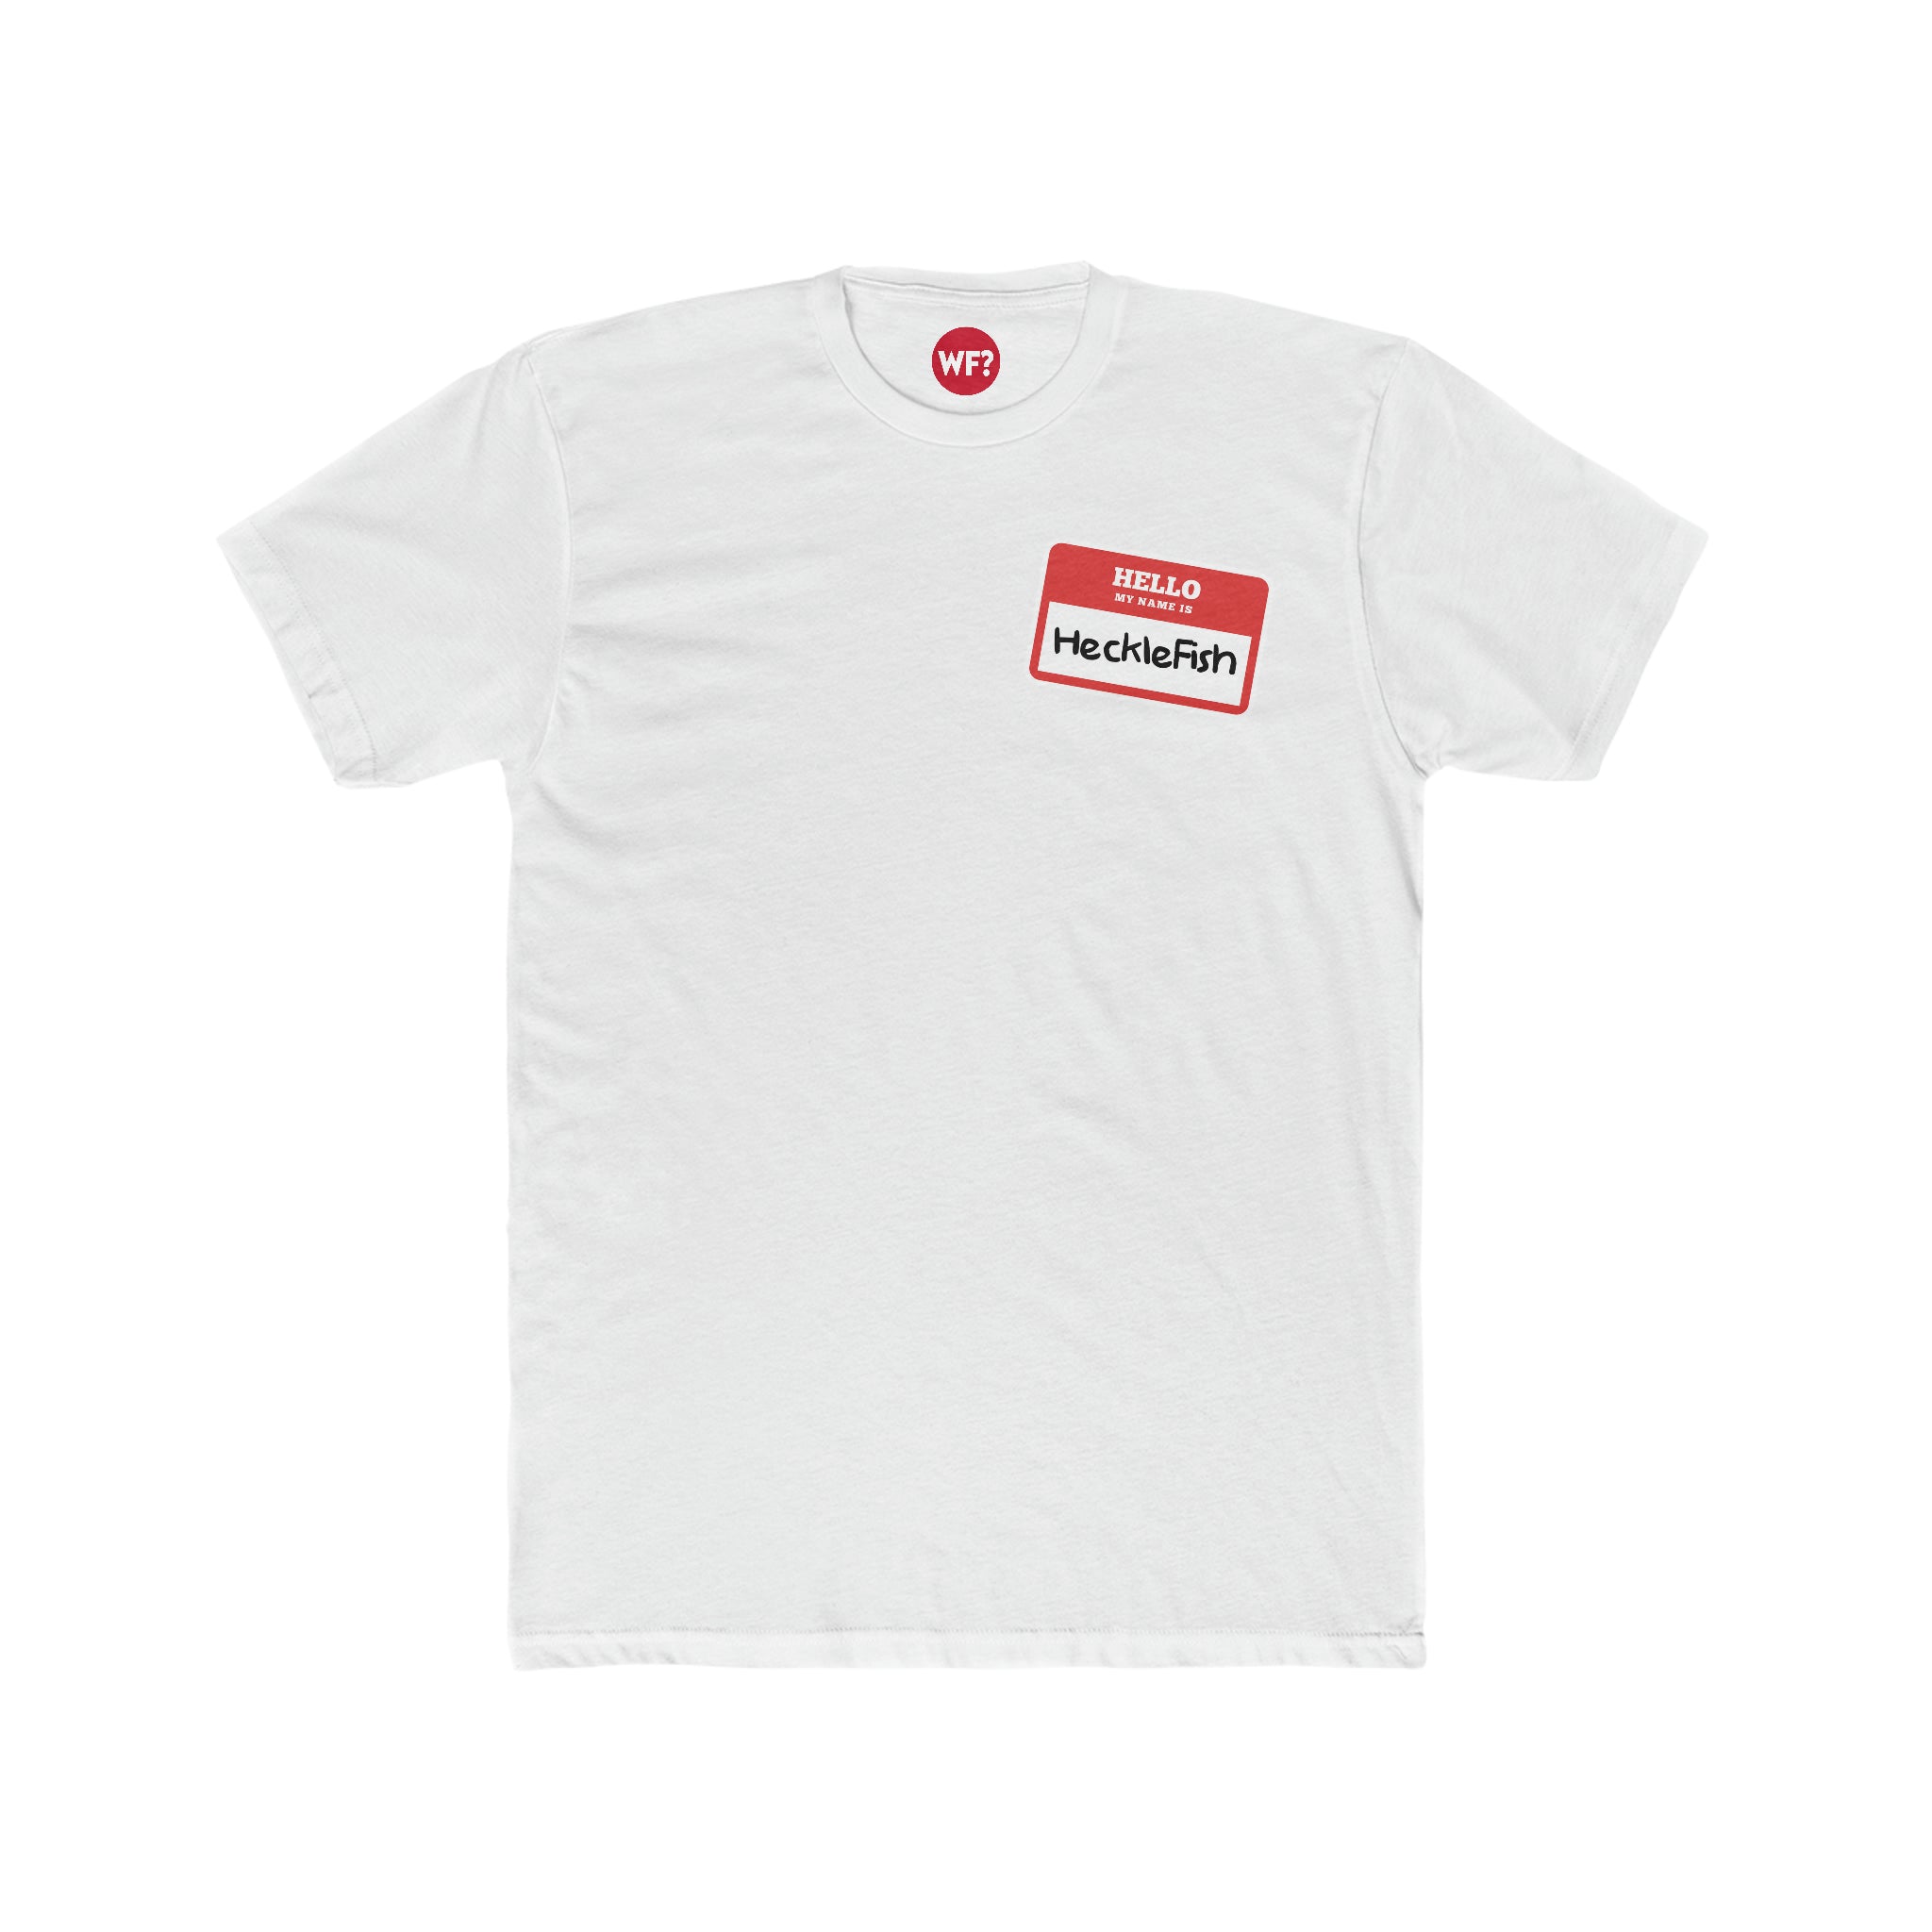 Buy solid-white Hecklefish Nametag Unisex T-Shirt